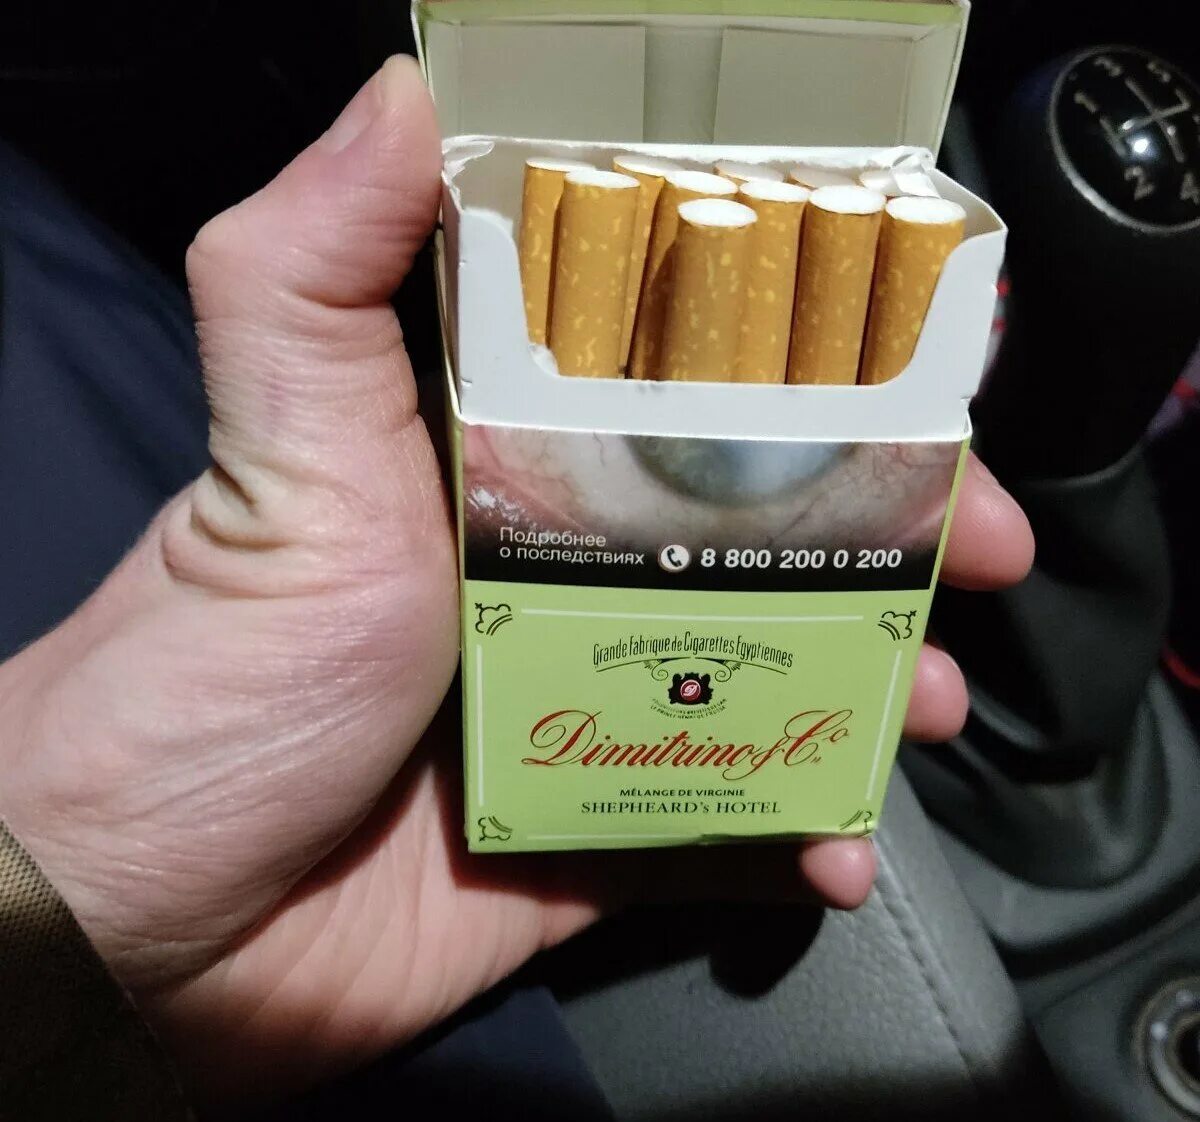 Сигареты Dimitrino Shepheard's Hotel. Марки сигарет. Табачные бренды. Российские сигареты марки. Сигареты димитрино